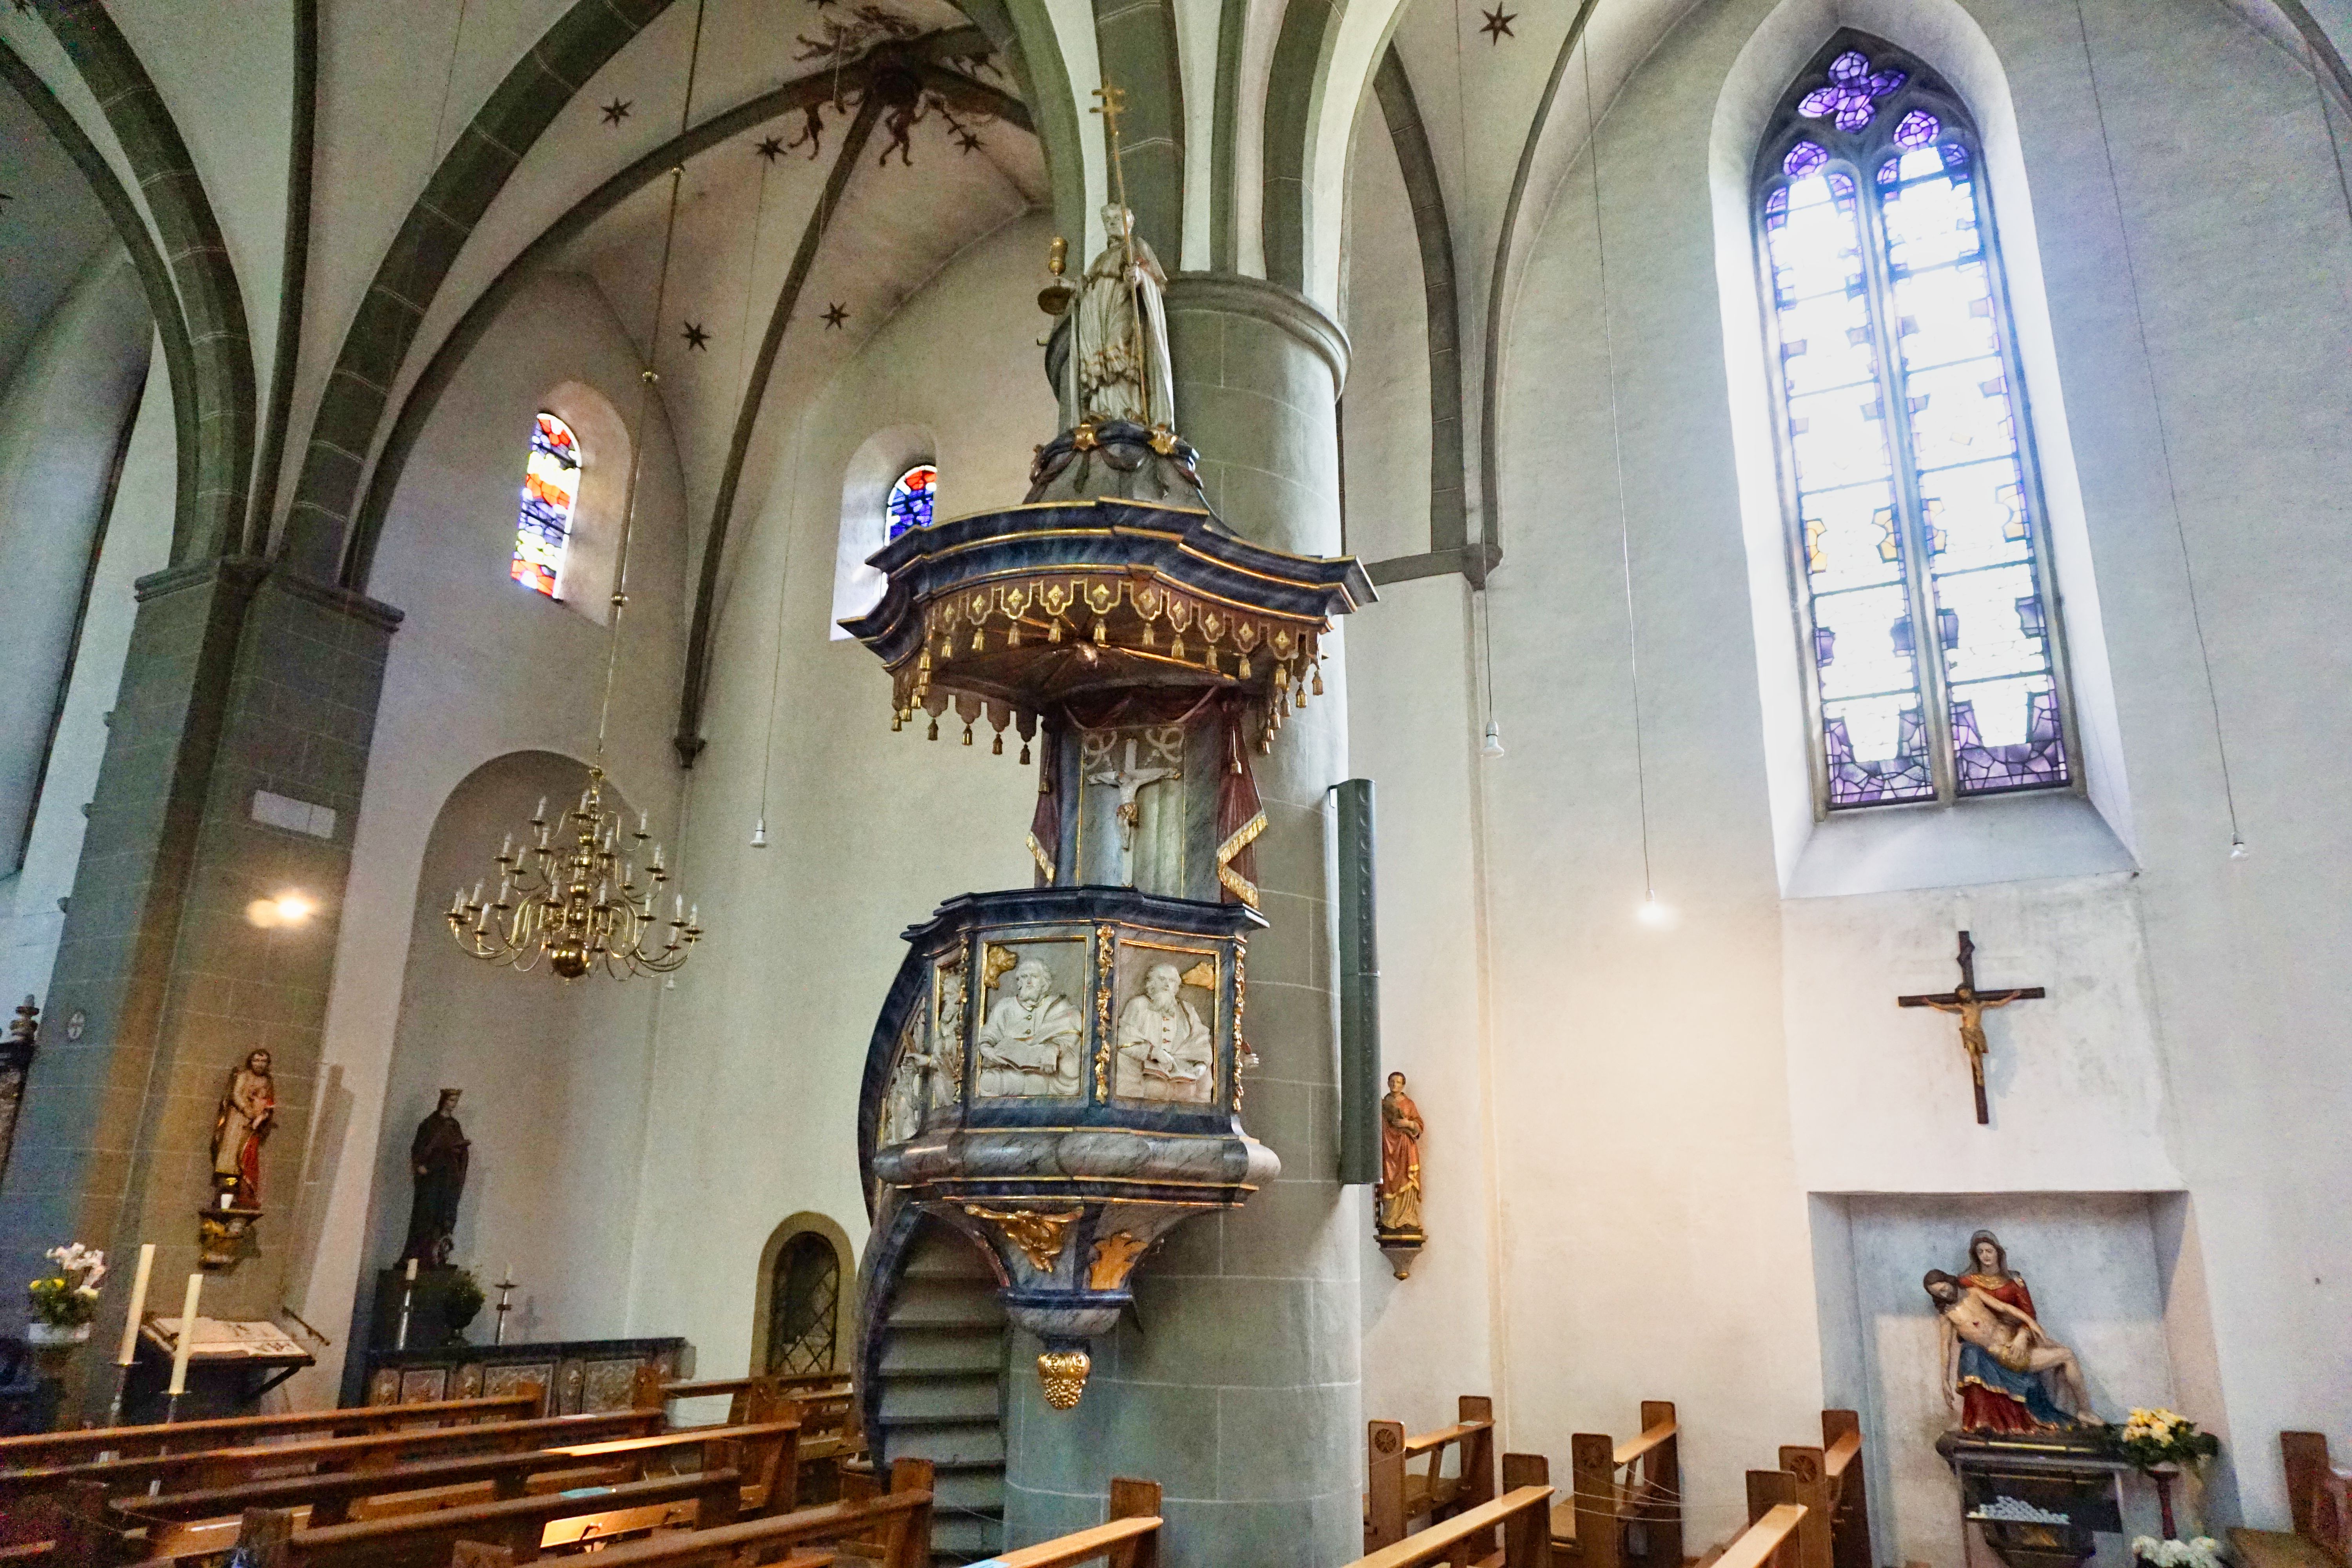 Kanzel der Kirche St. Laurentius in Clarholz, Herzebrock-Clarholz.
